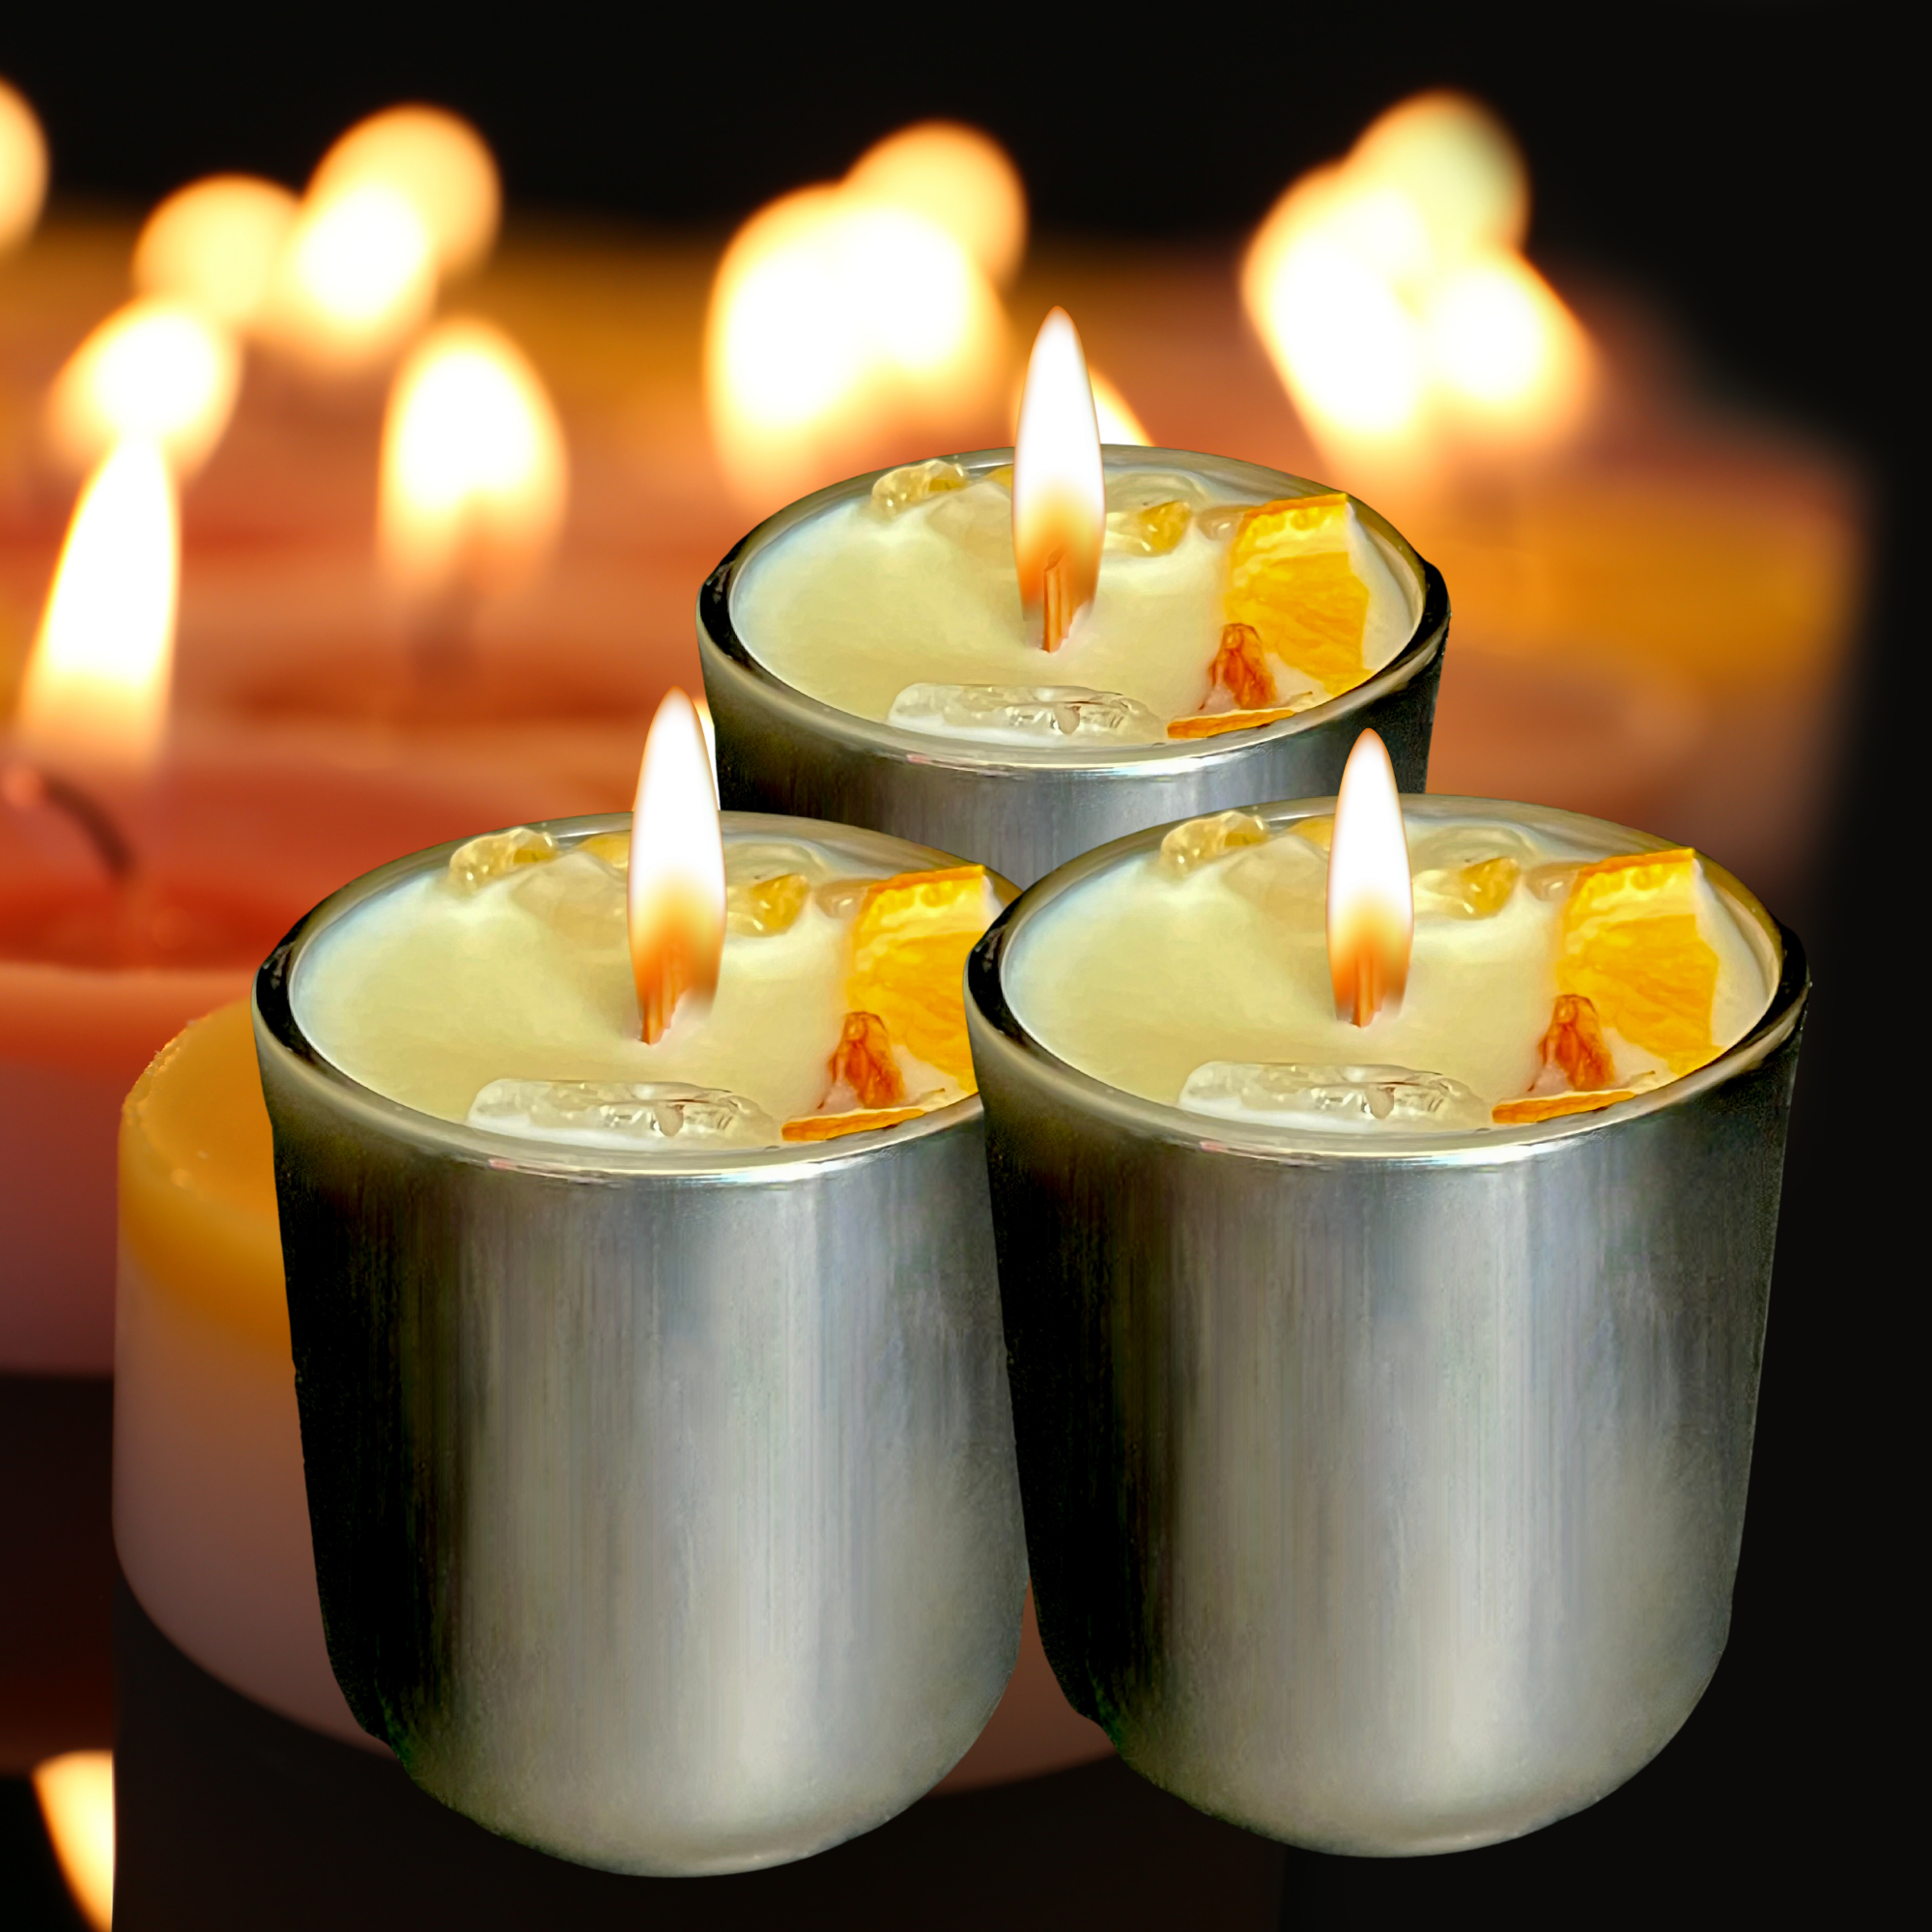 Citrus Sol - Sample Candle